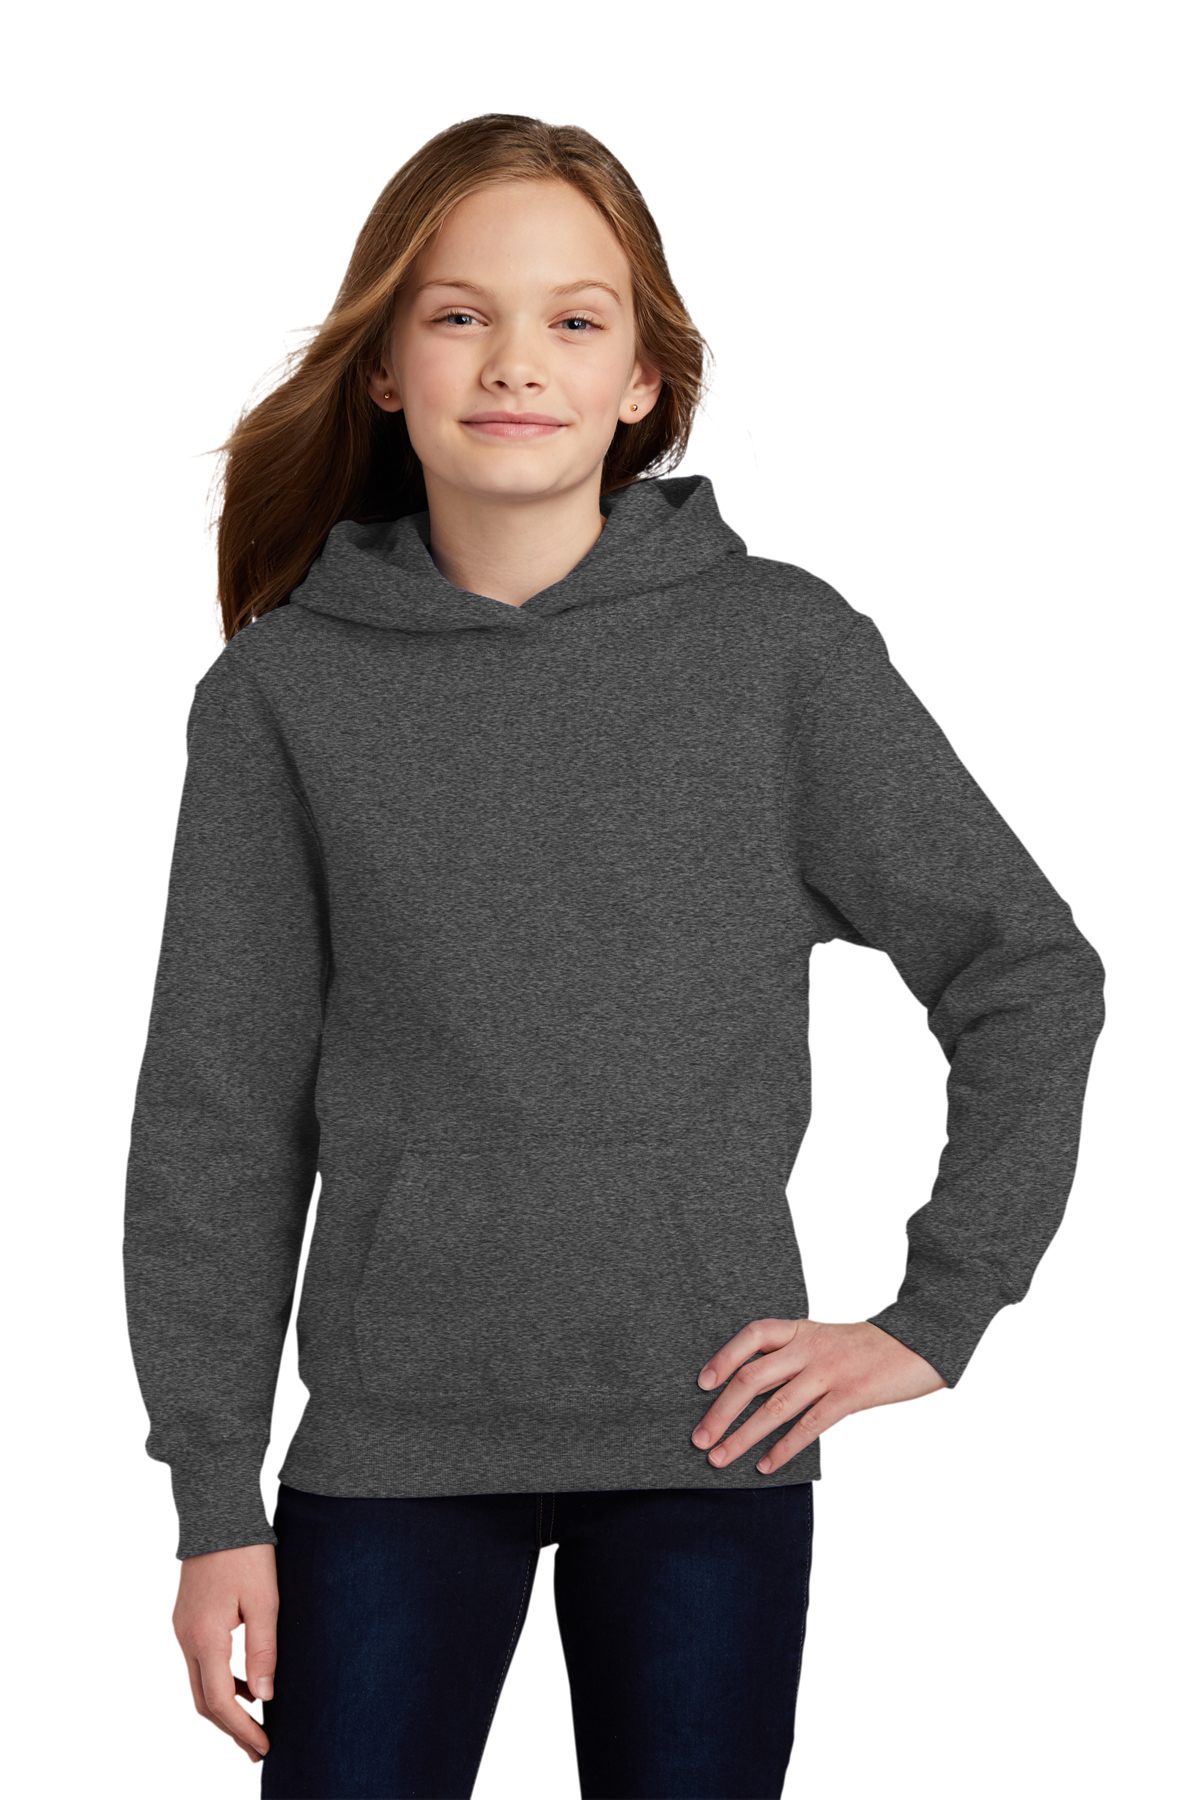 Brown Classic Hooded Sweatshirt (Heather Grey) – Ivysport